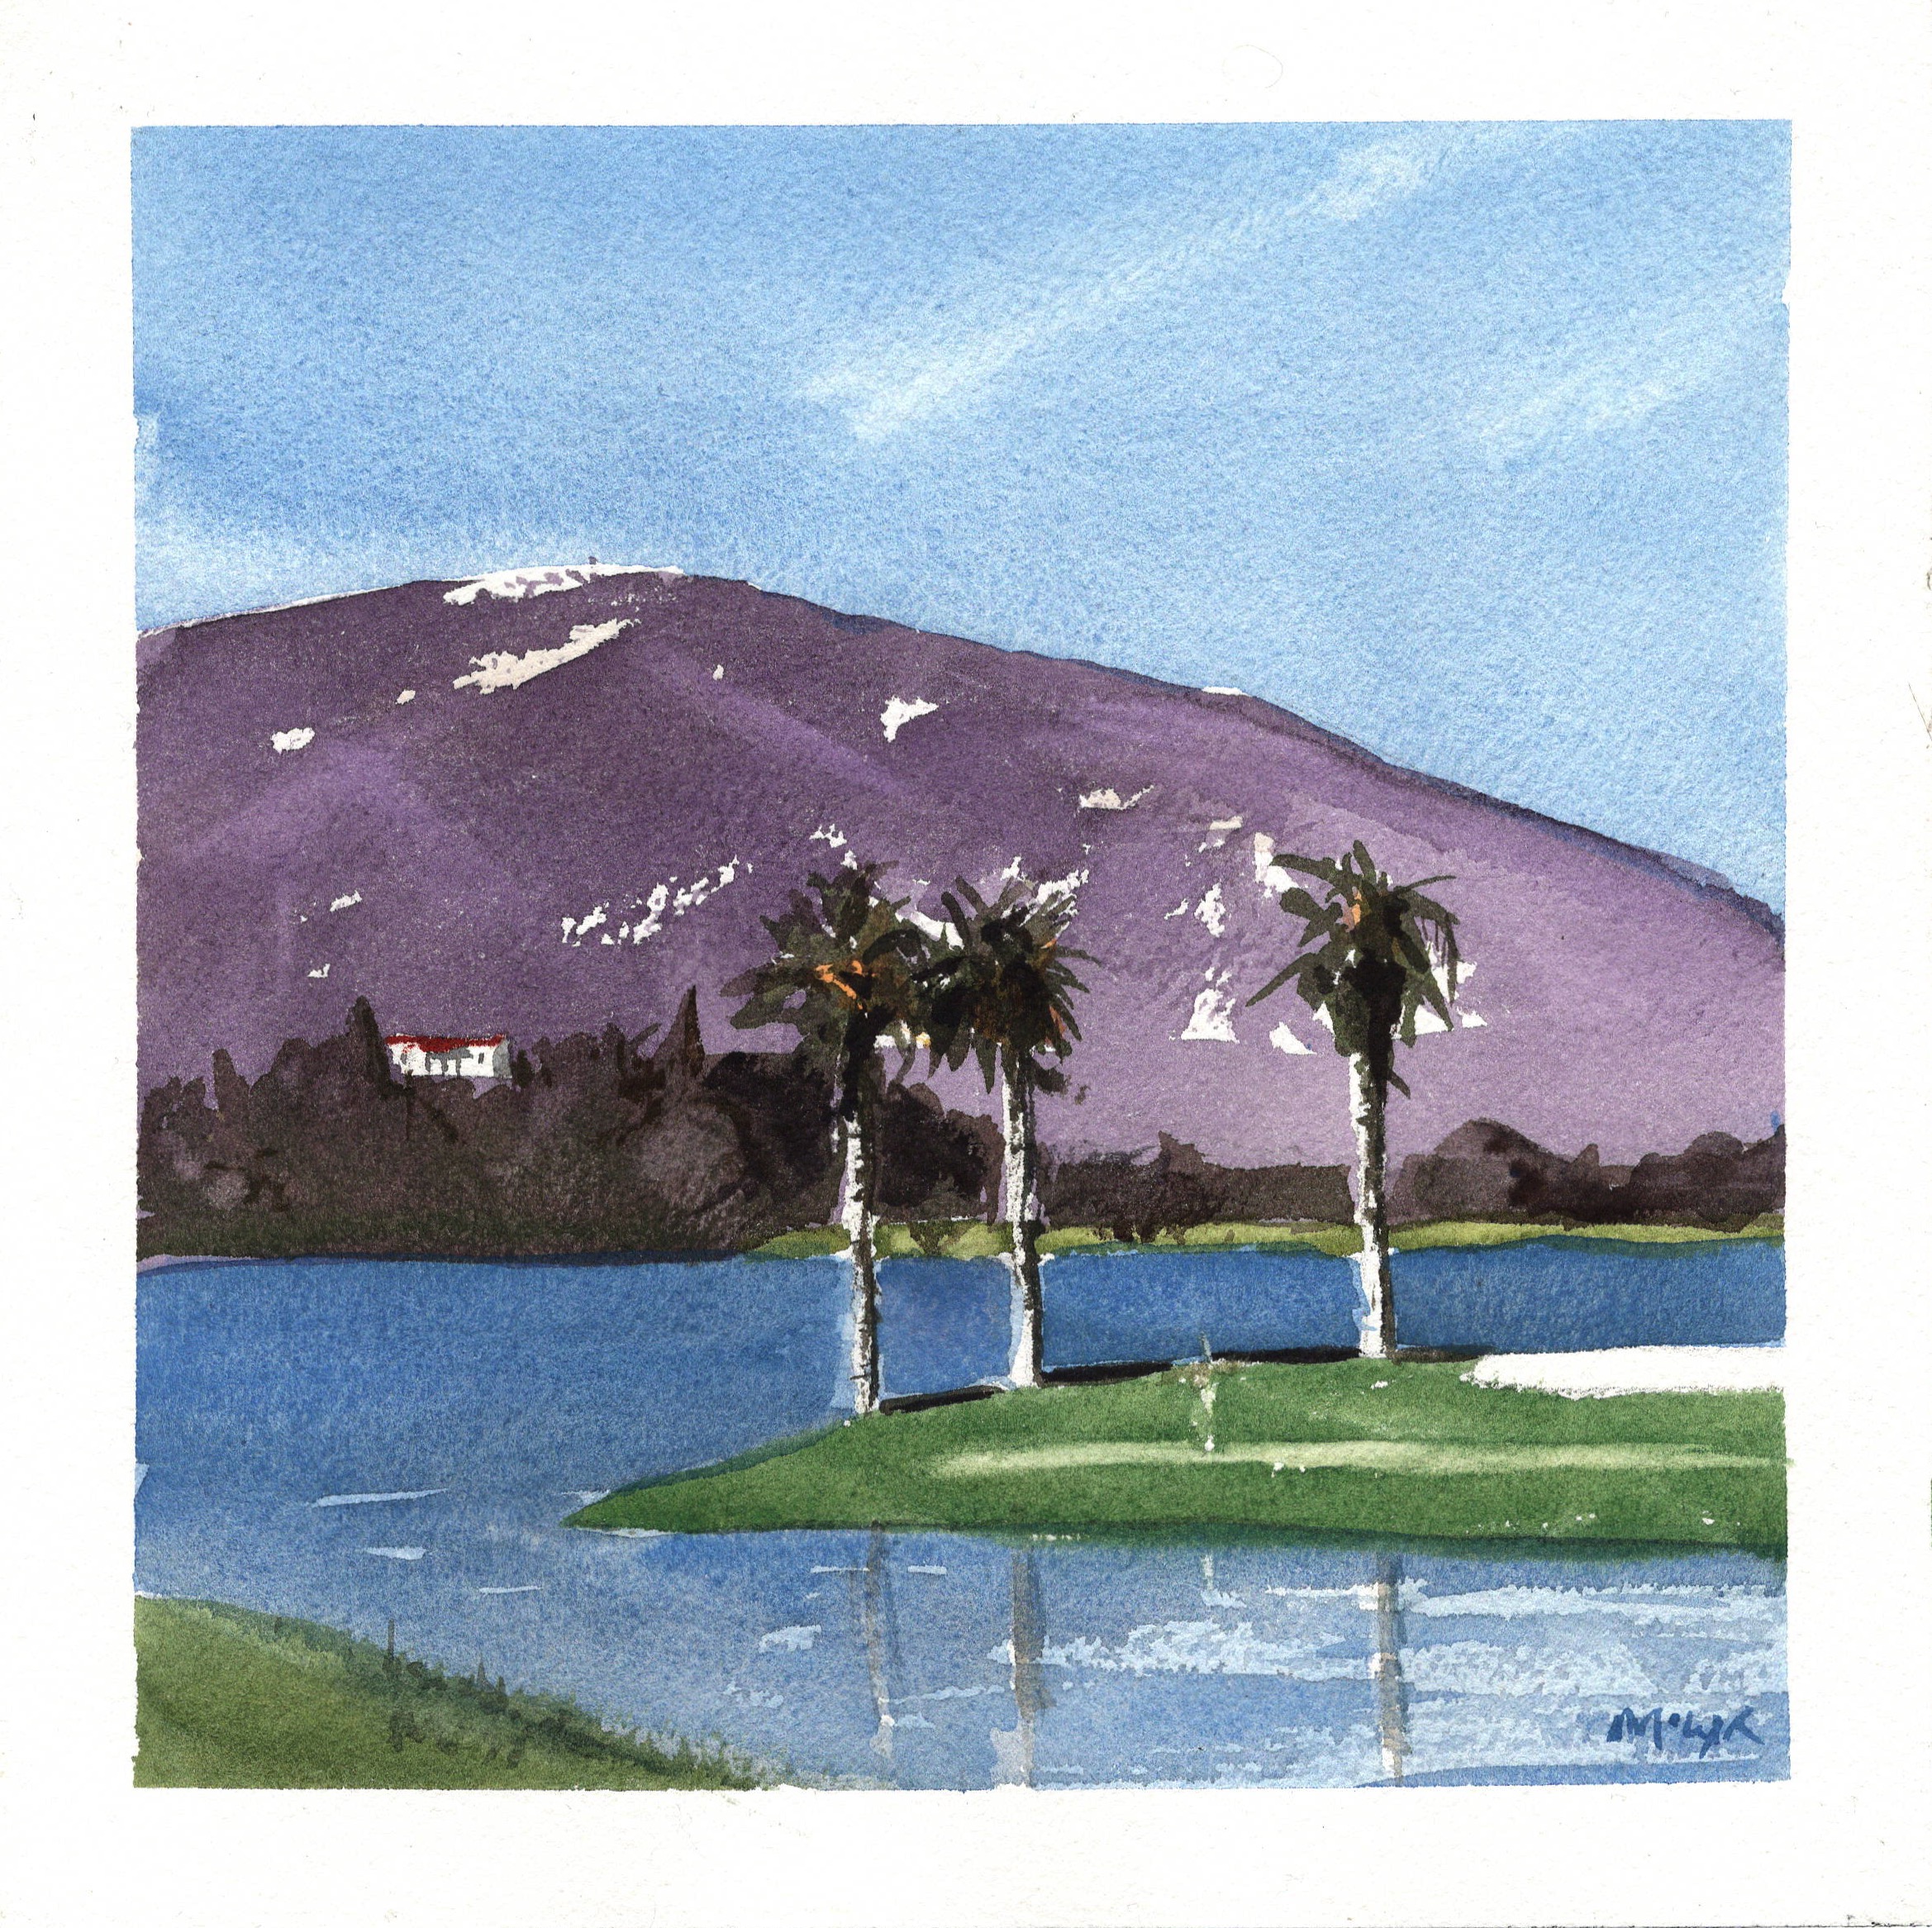 watercolor of the 13th hole at La Cumbre Country Club in Santa Barbara California by Mark Mclychok